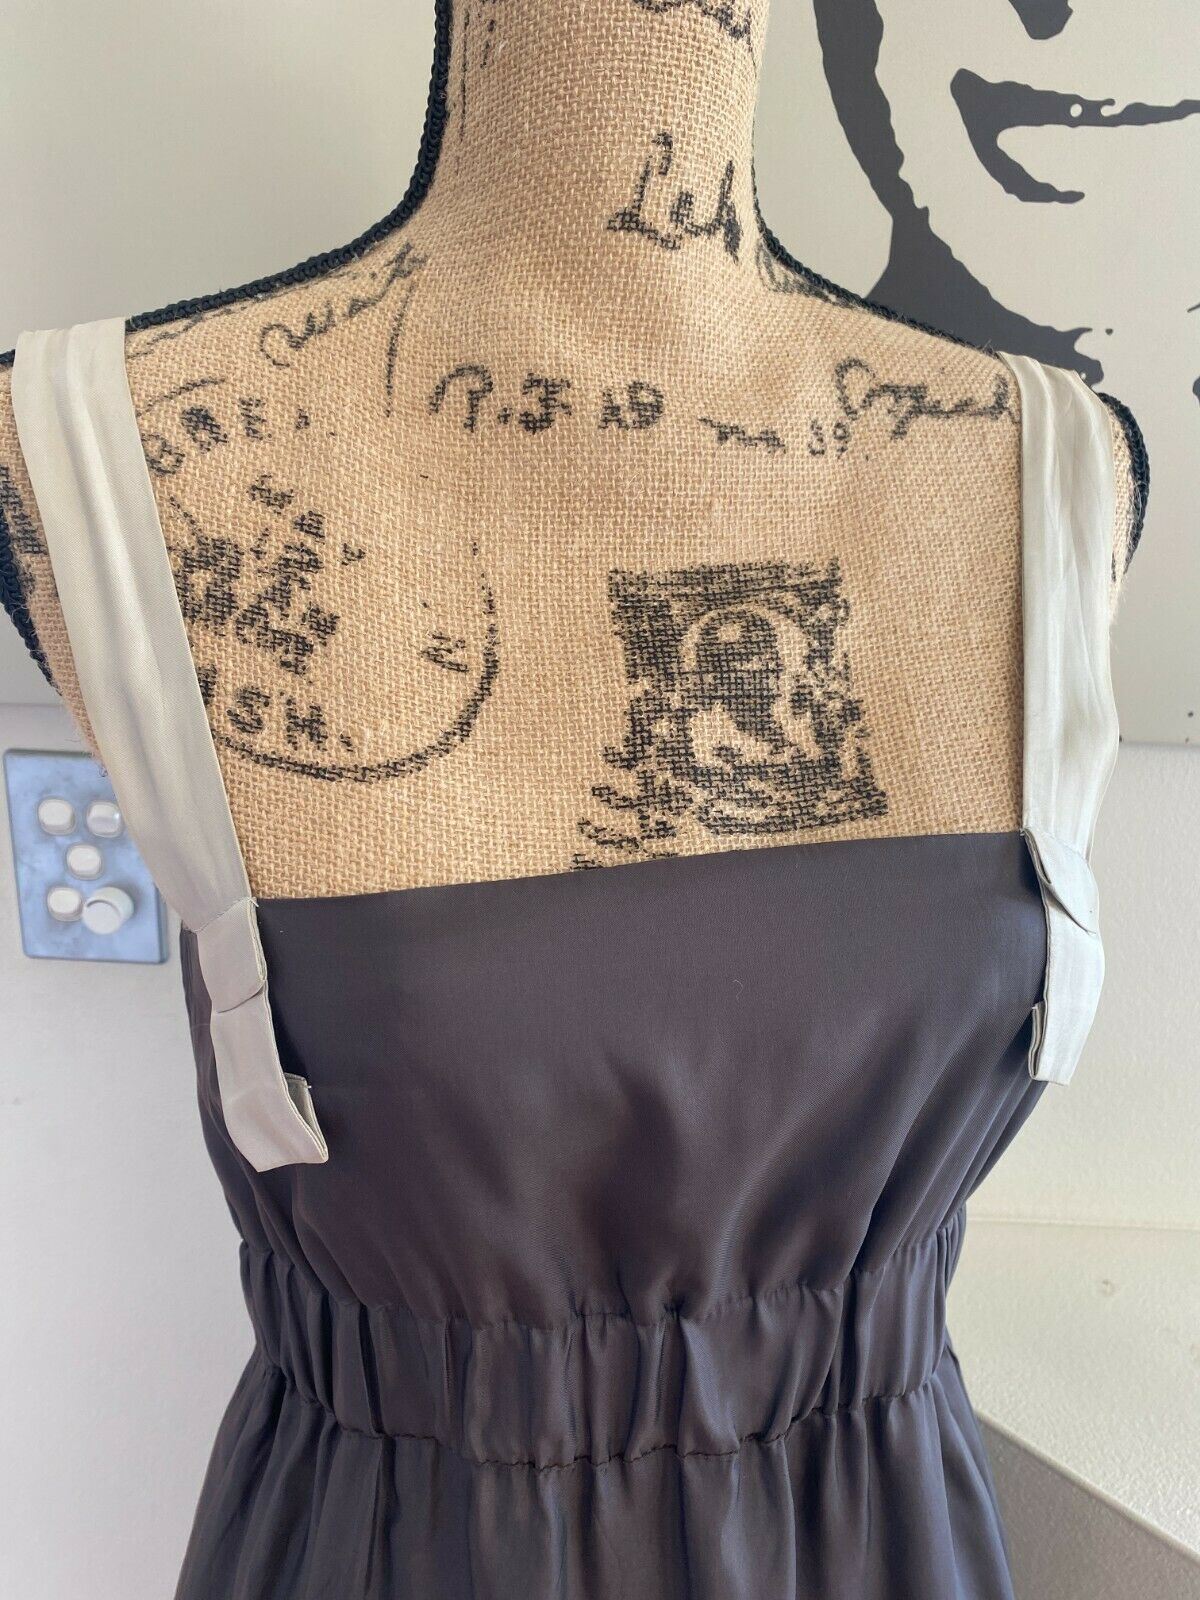 Scanlan & Theodore Charcoal Dress / Contrast Straps, Acetate Cupro, Empire Waist